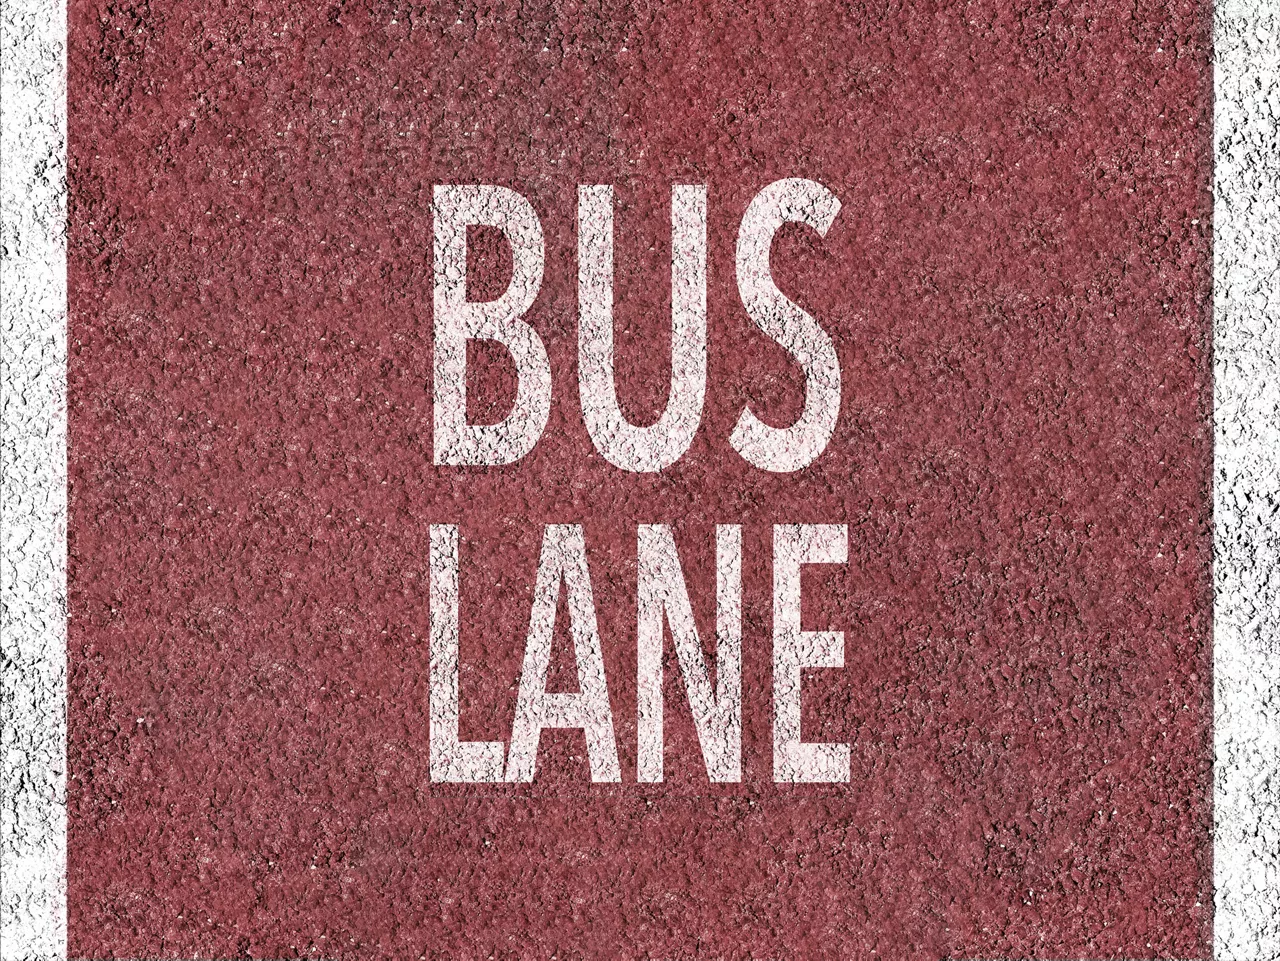 Red bus lane marked on asphalt